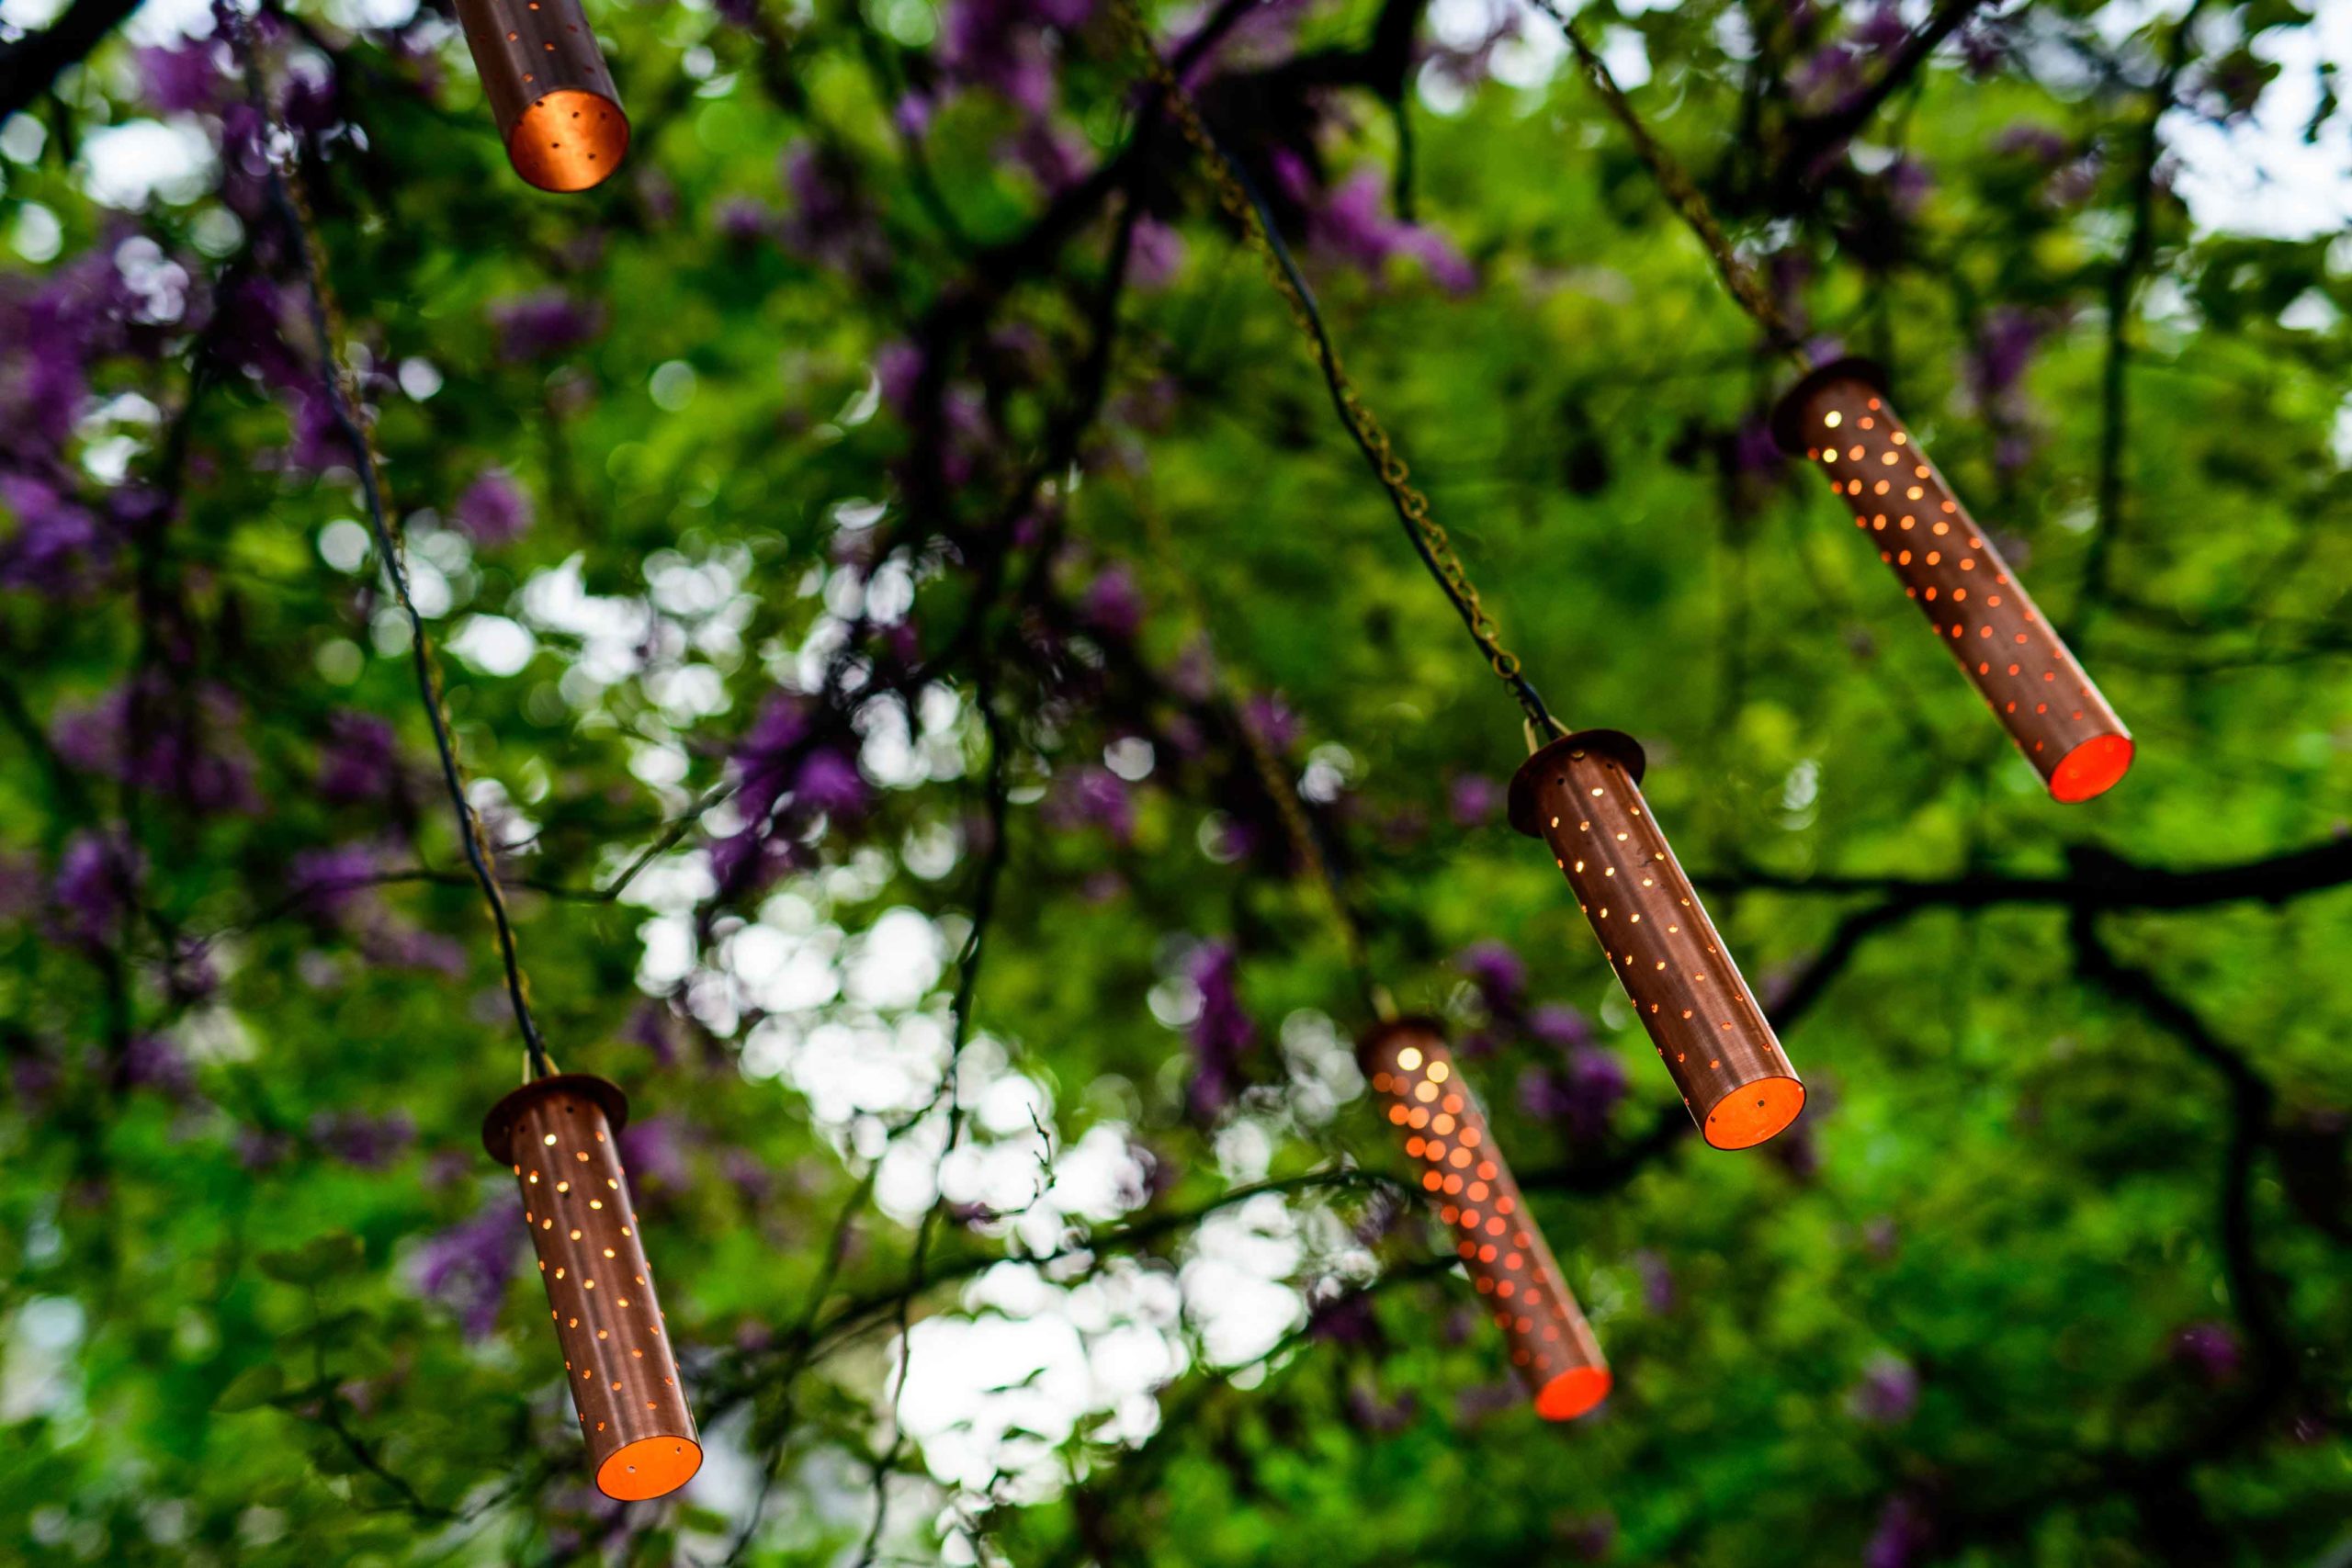 Starliter hanging pendant lights in tree